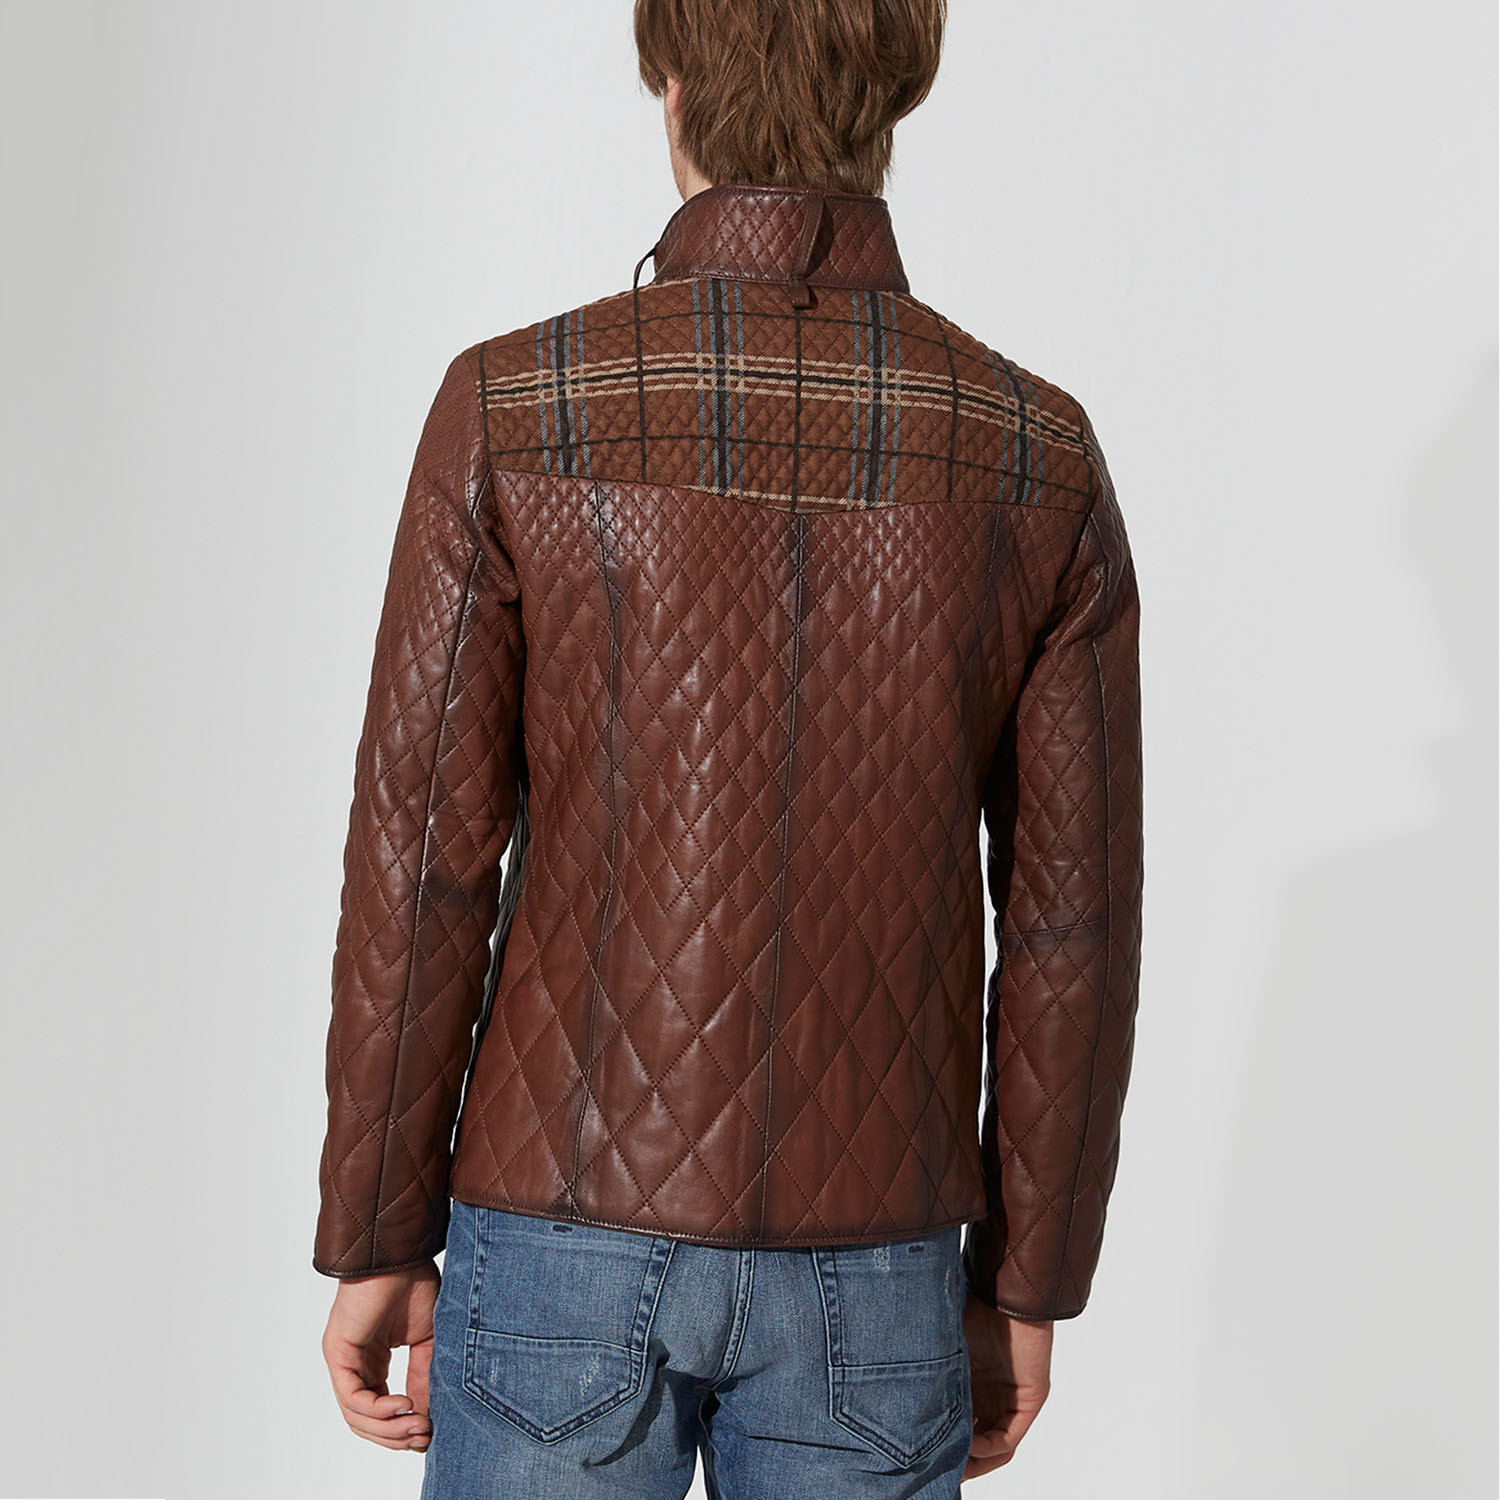 Bartin Leather Jacket // Chestnut (M) - Iparelde // Burak & Espana ...